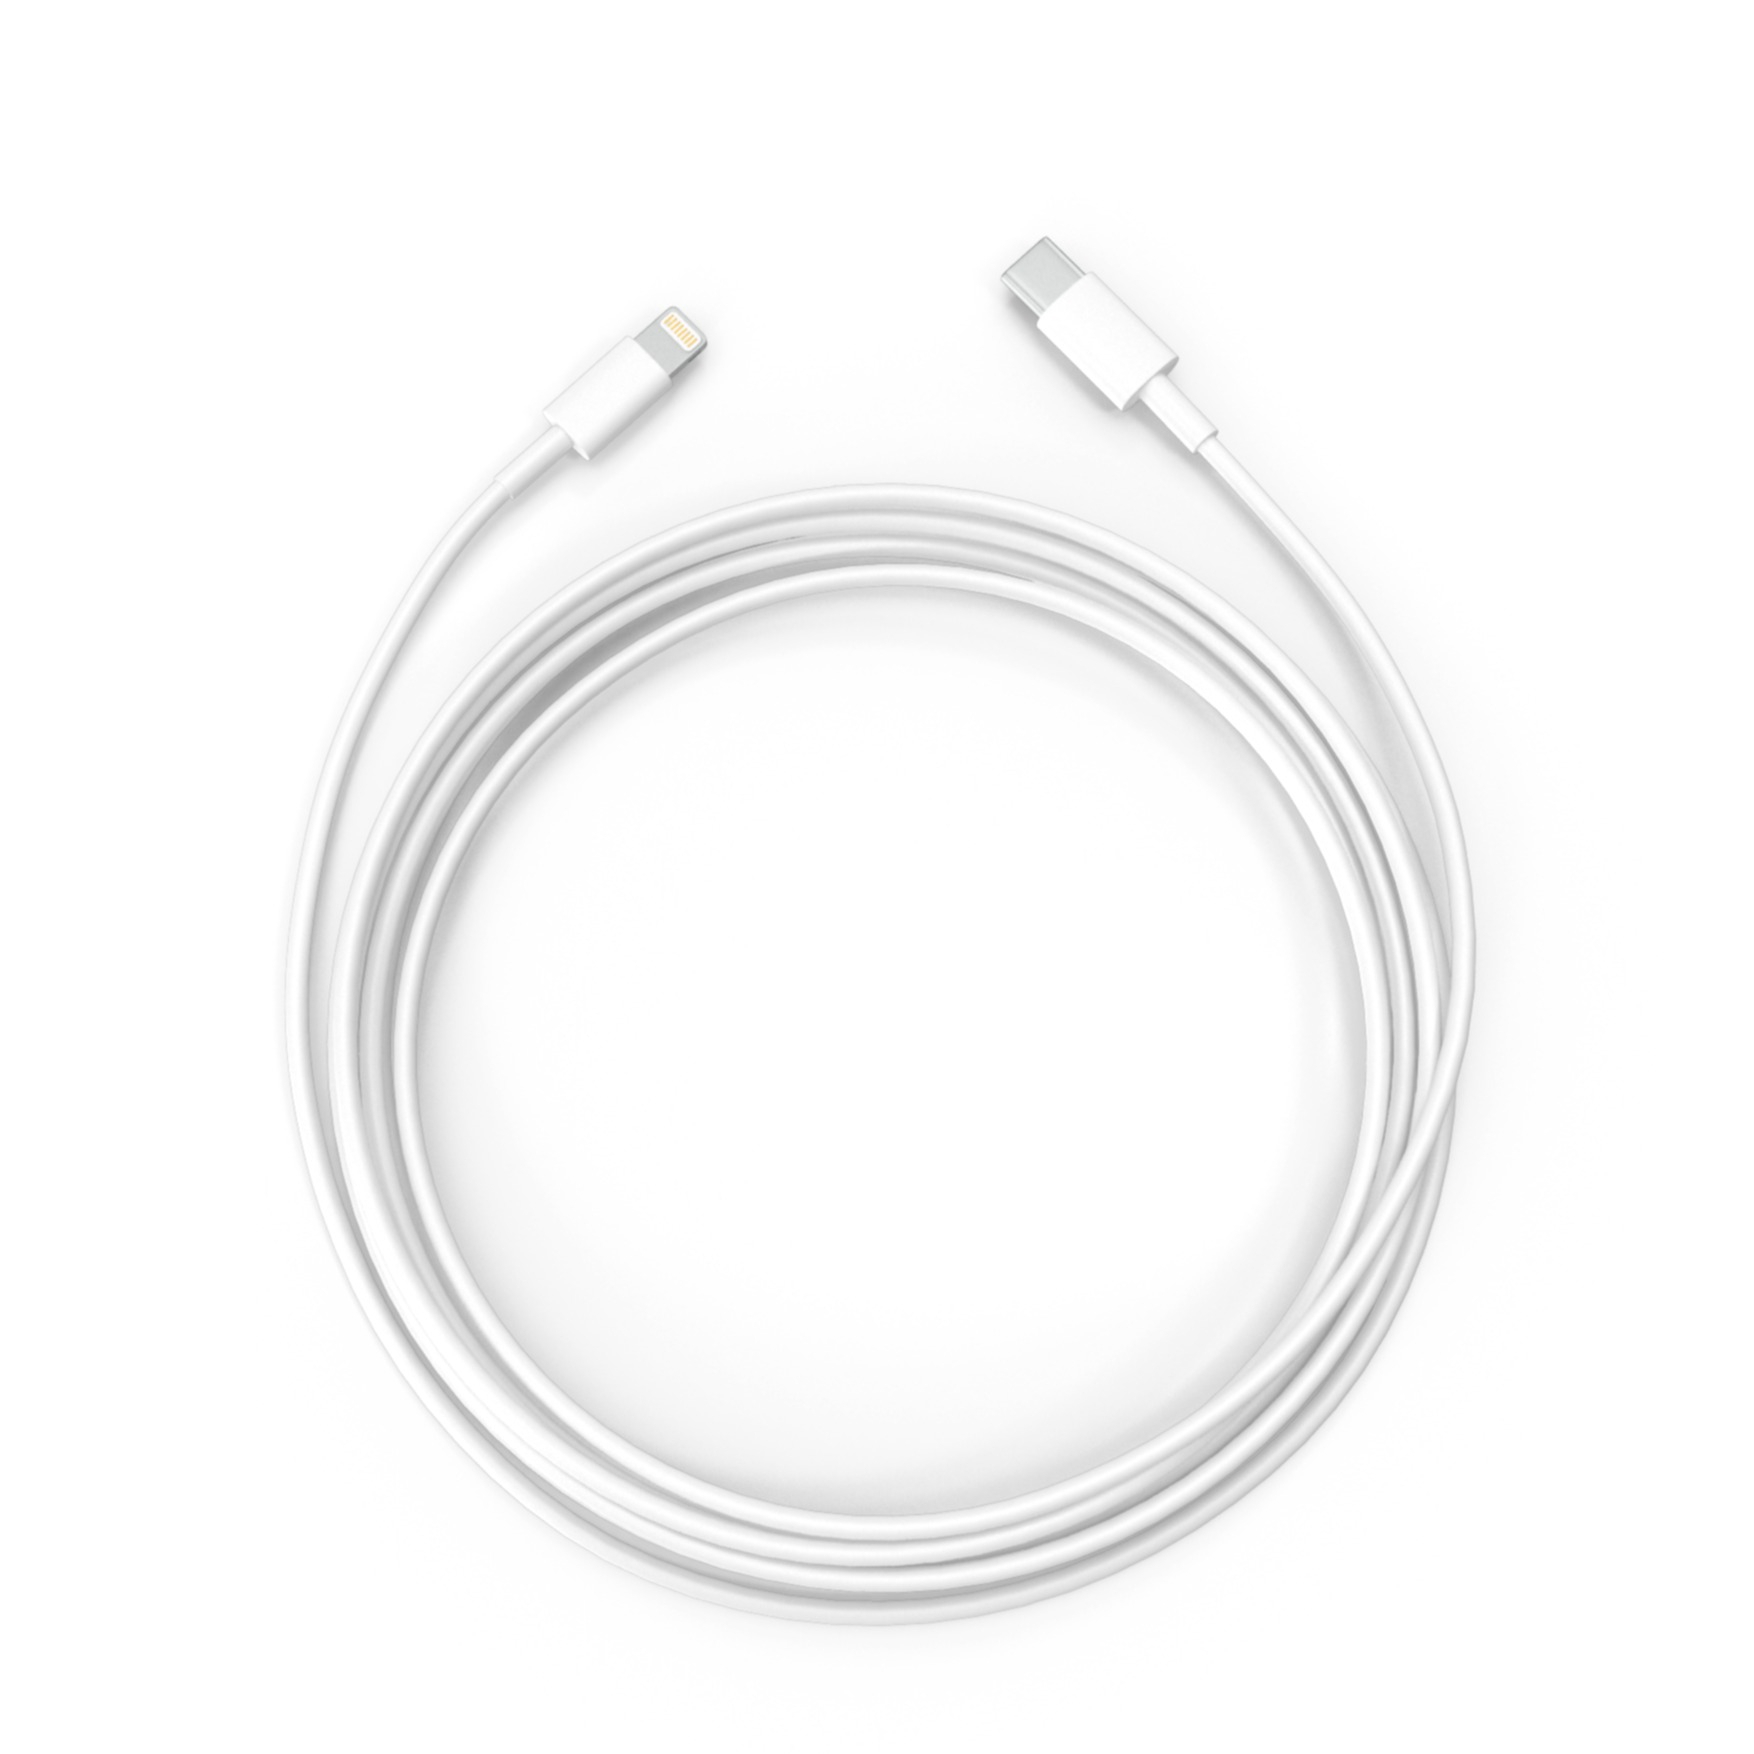 Image of Apple - (1m) iPhone 12 Pro Max Lightning auf USB C Ladekabel Datenkabel MK0X2ZM/A - Weiss bei Apfelkiste.ch